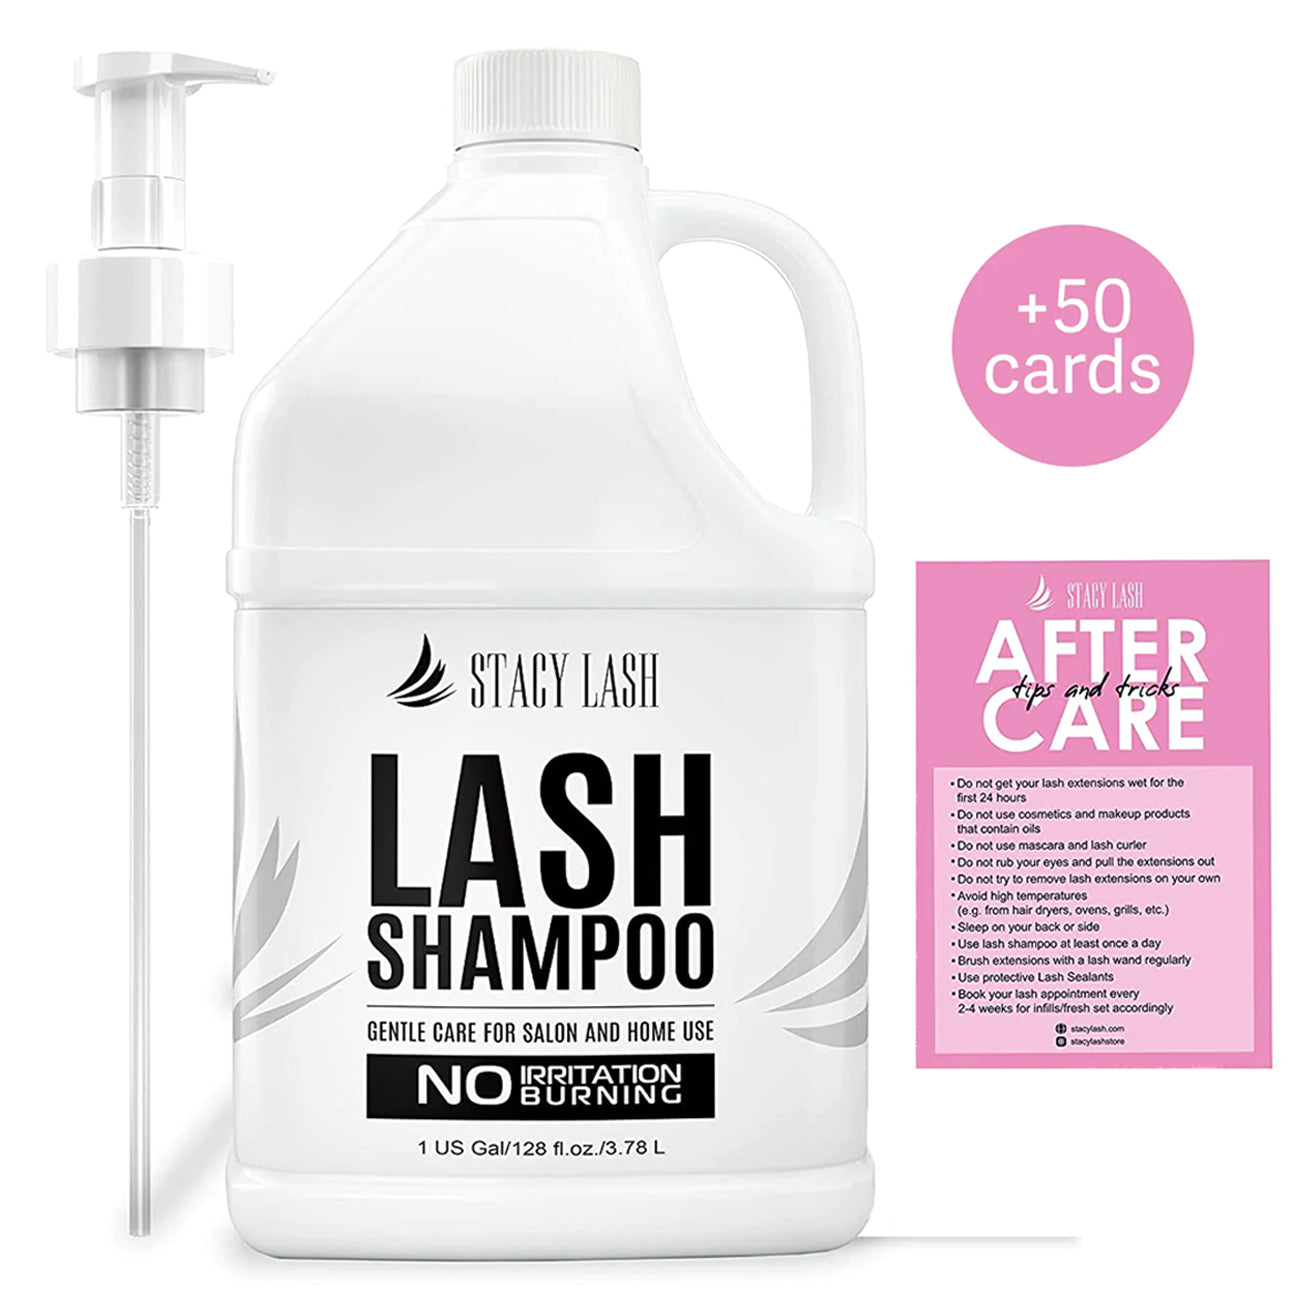 Stacy Lash Shampoo / Foam Cleanser / 1 US Gal / 128 Fl. Oz. / 3.78 L